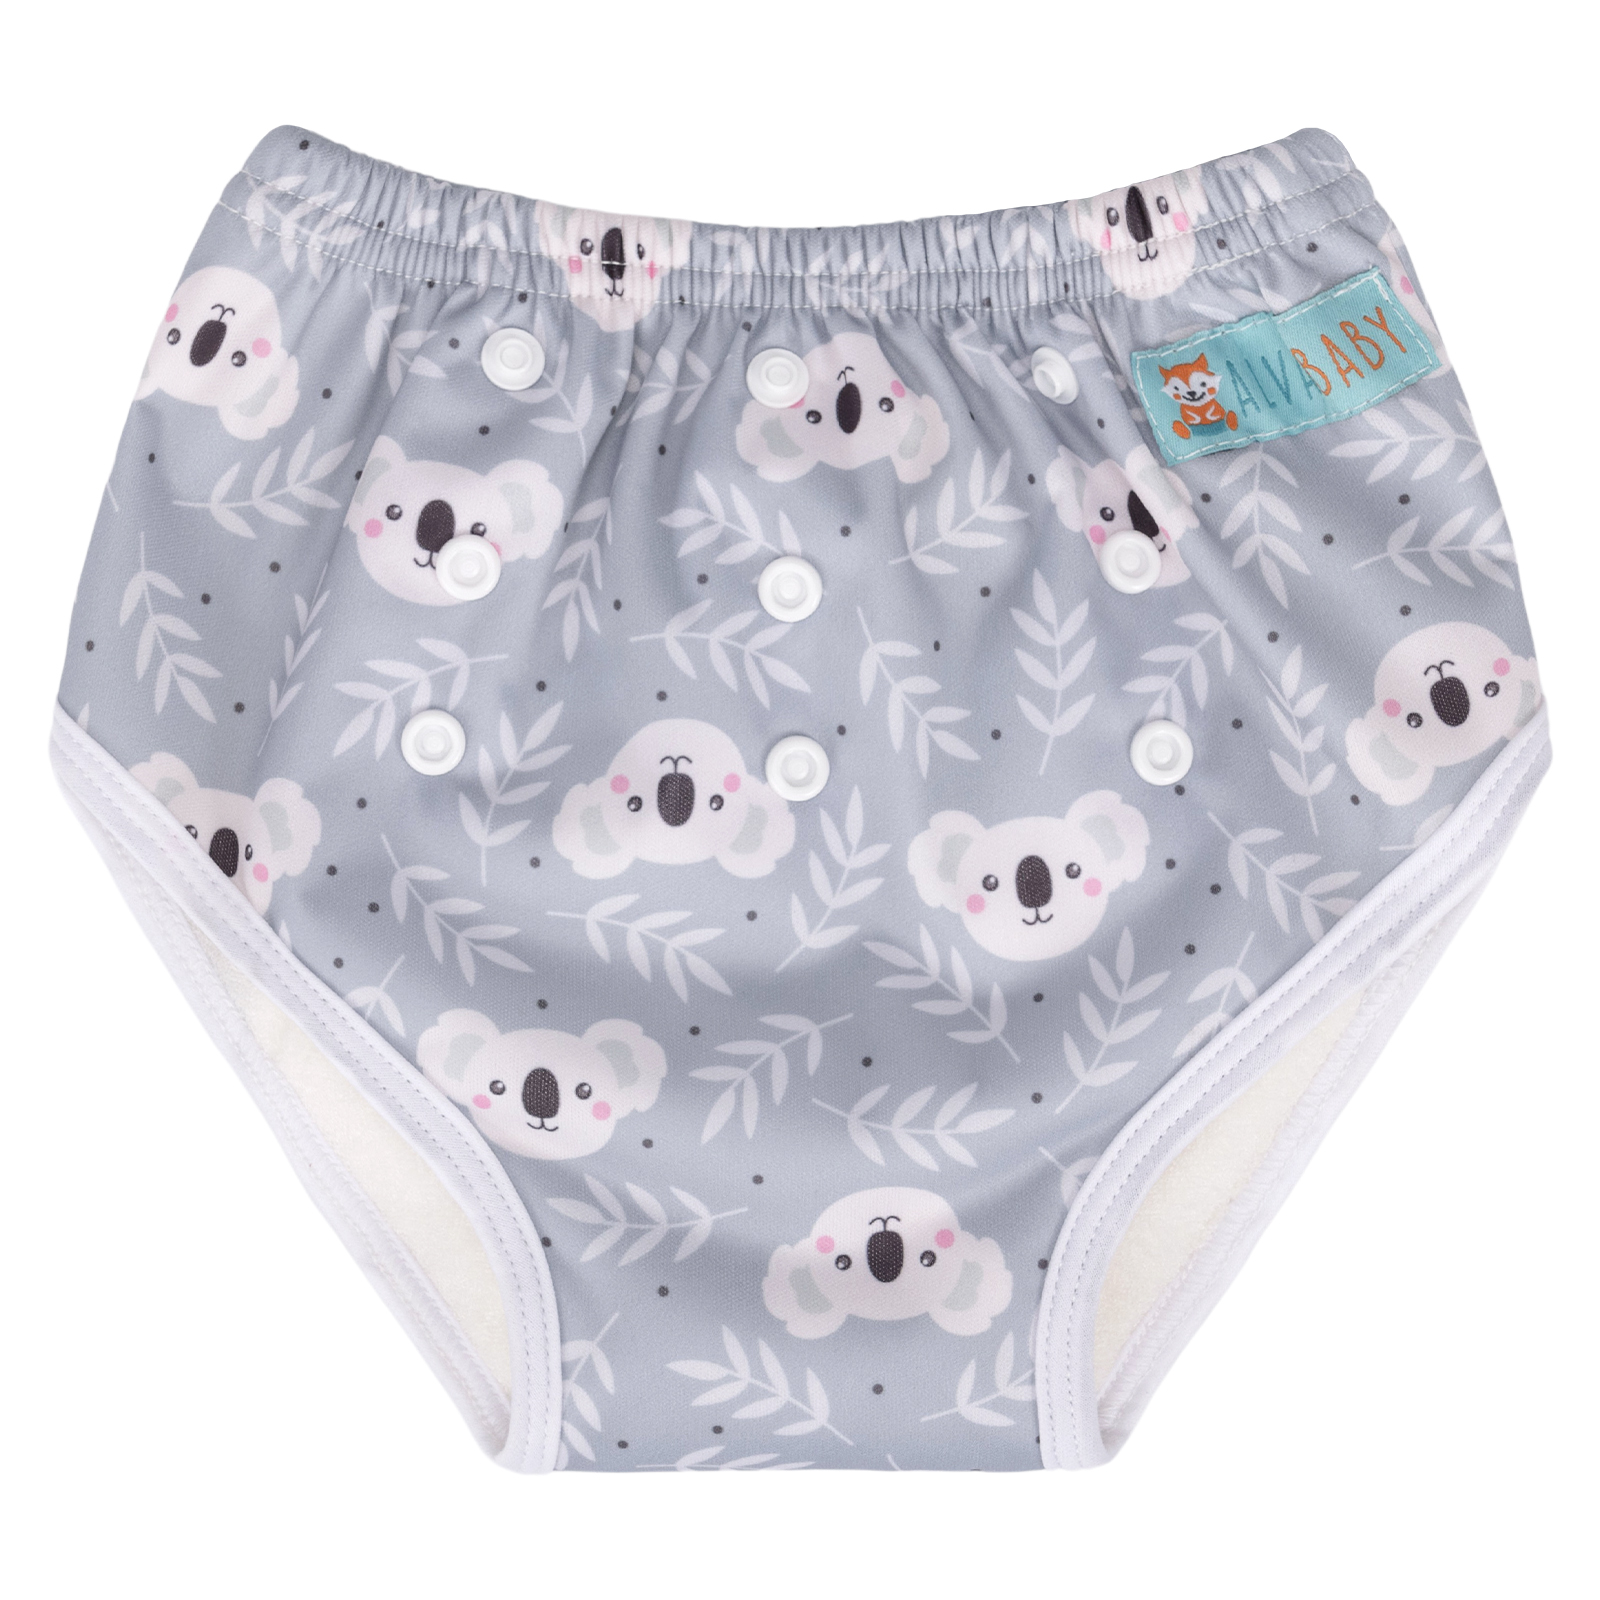 Toddler Training Potty Underwear (Animal Print, 5T), 5T - Jay C